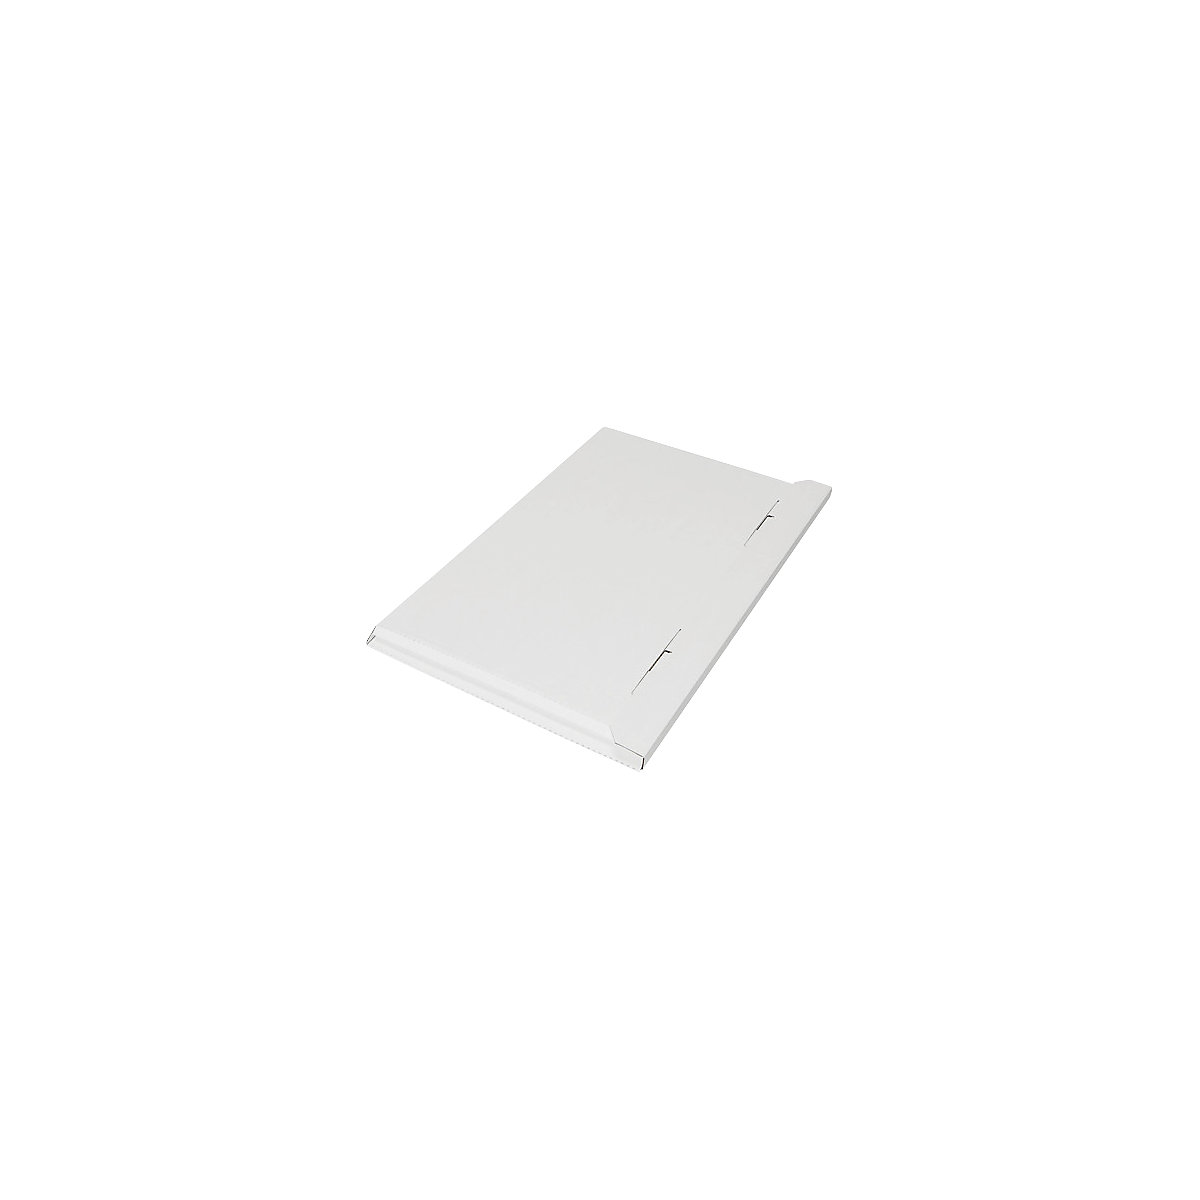 Flach-/Kalender-Pack, 1-wellig, Innen-LxBxH 600 x 425 x 10 mm, weiß, ab 20 Stk-10